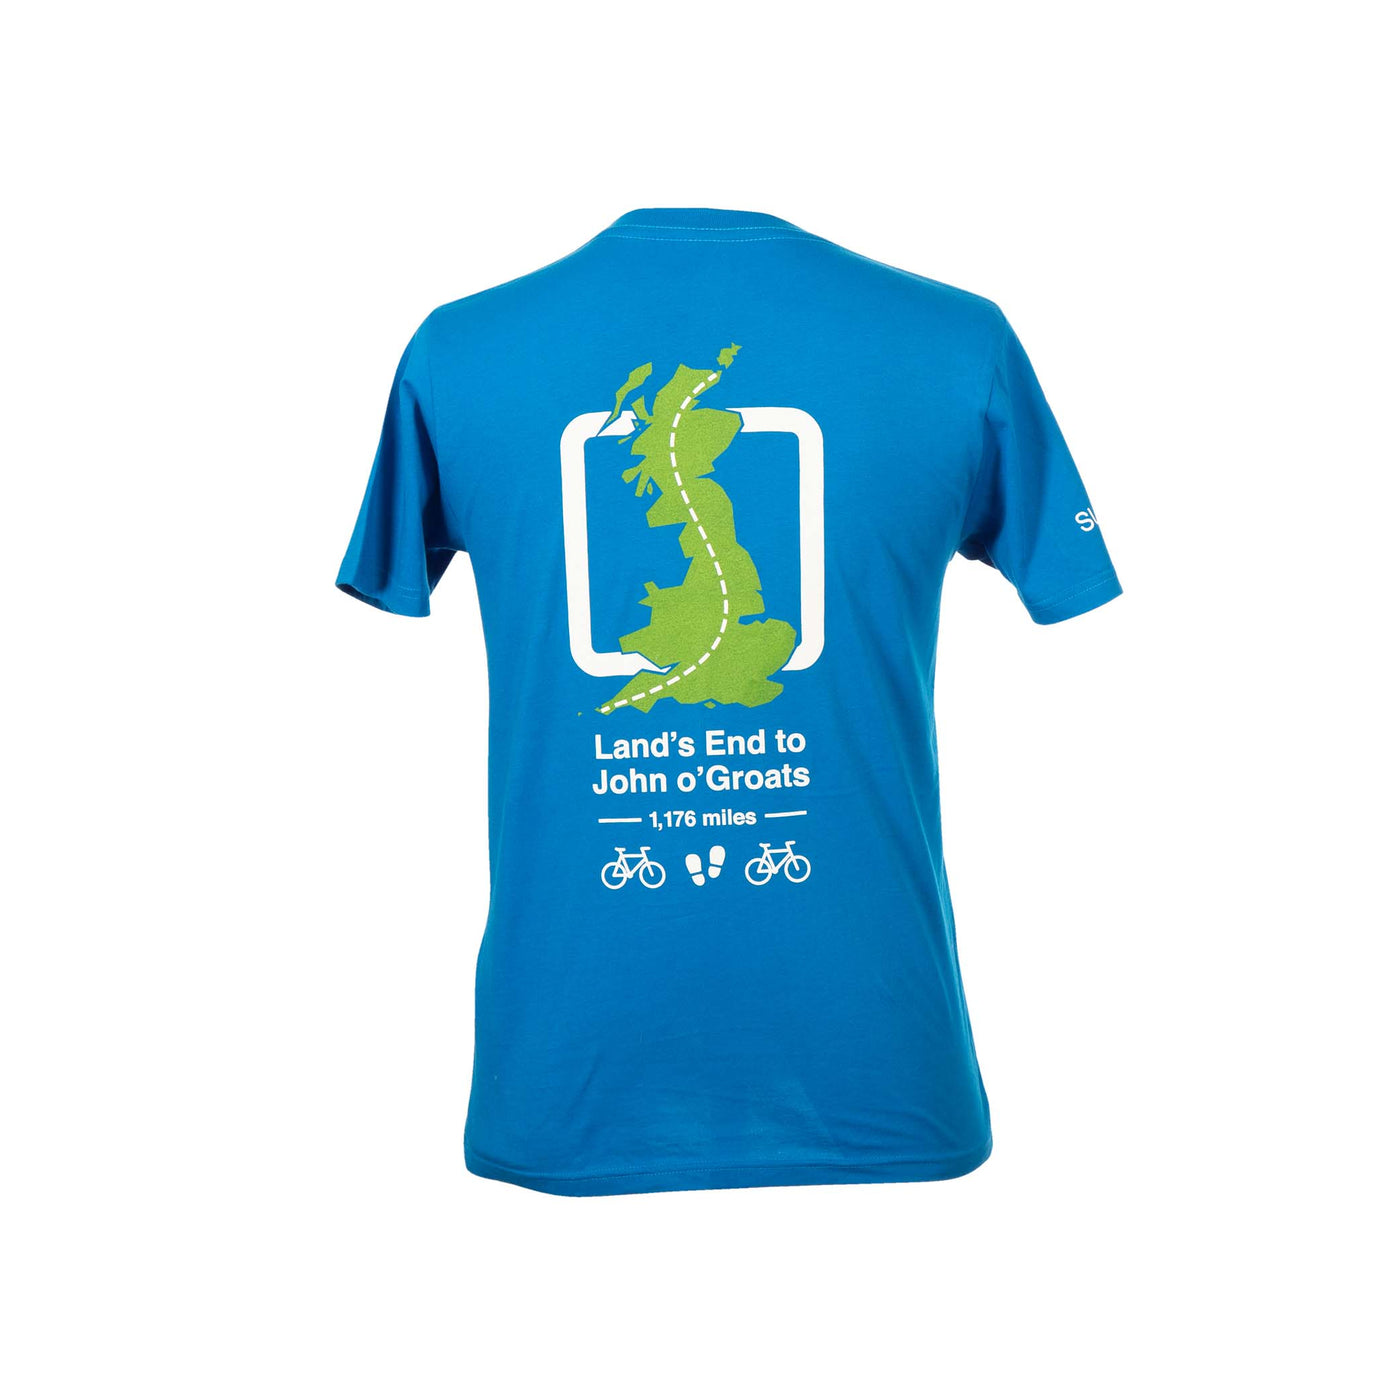 Land's End to John o'Groats (LEJOG) - unisex t-shirt